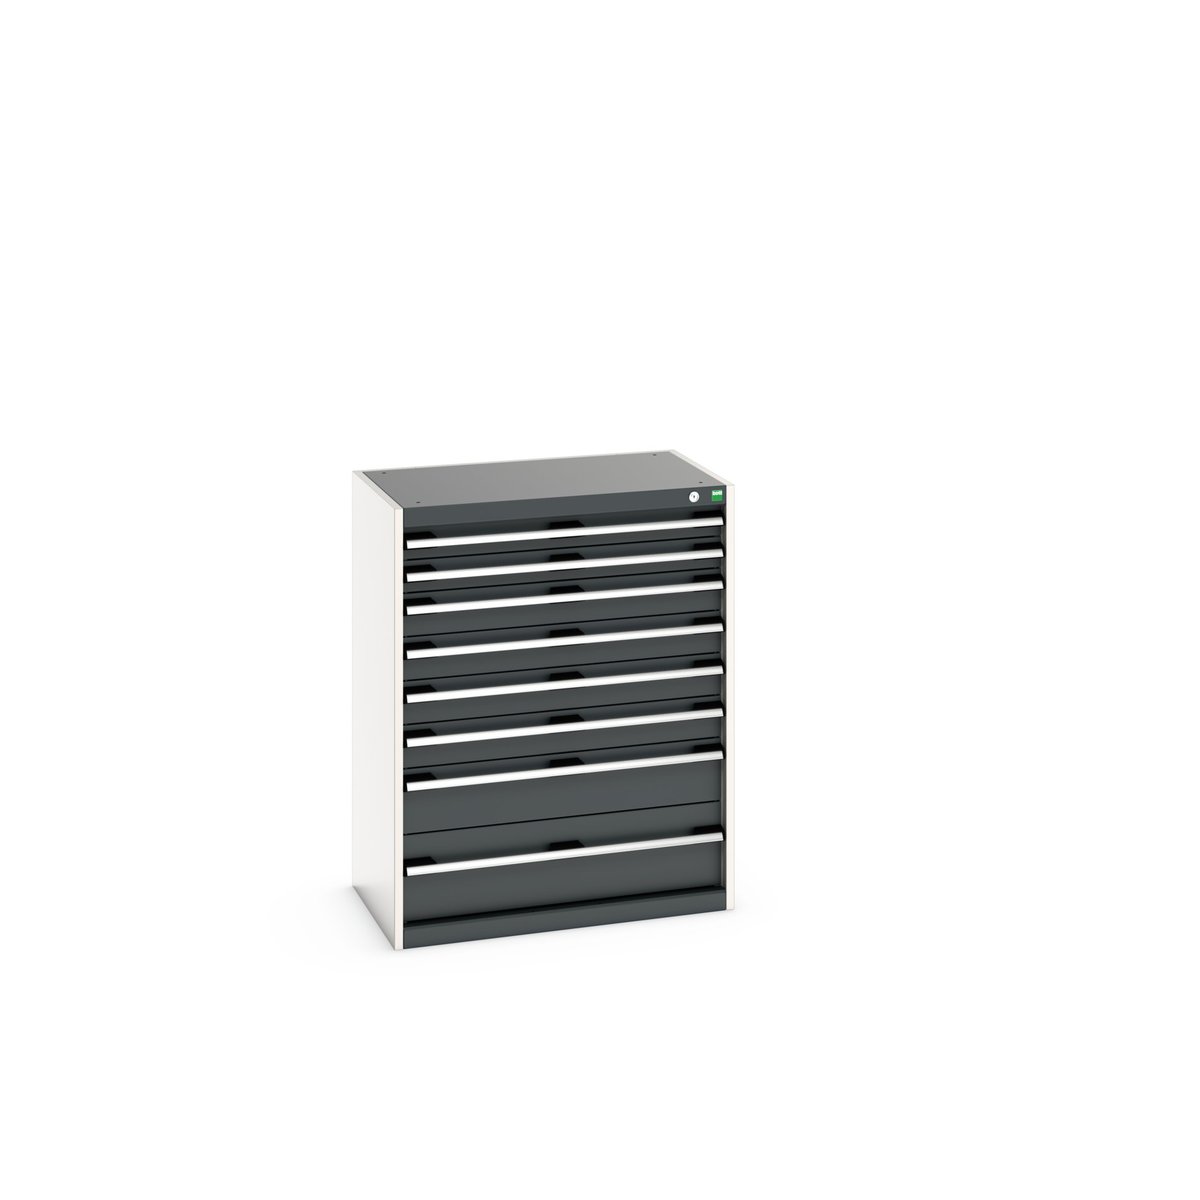 40012102. - cubio drawer cabinet